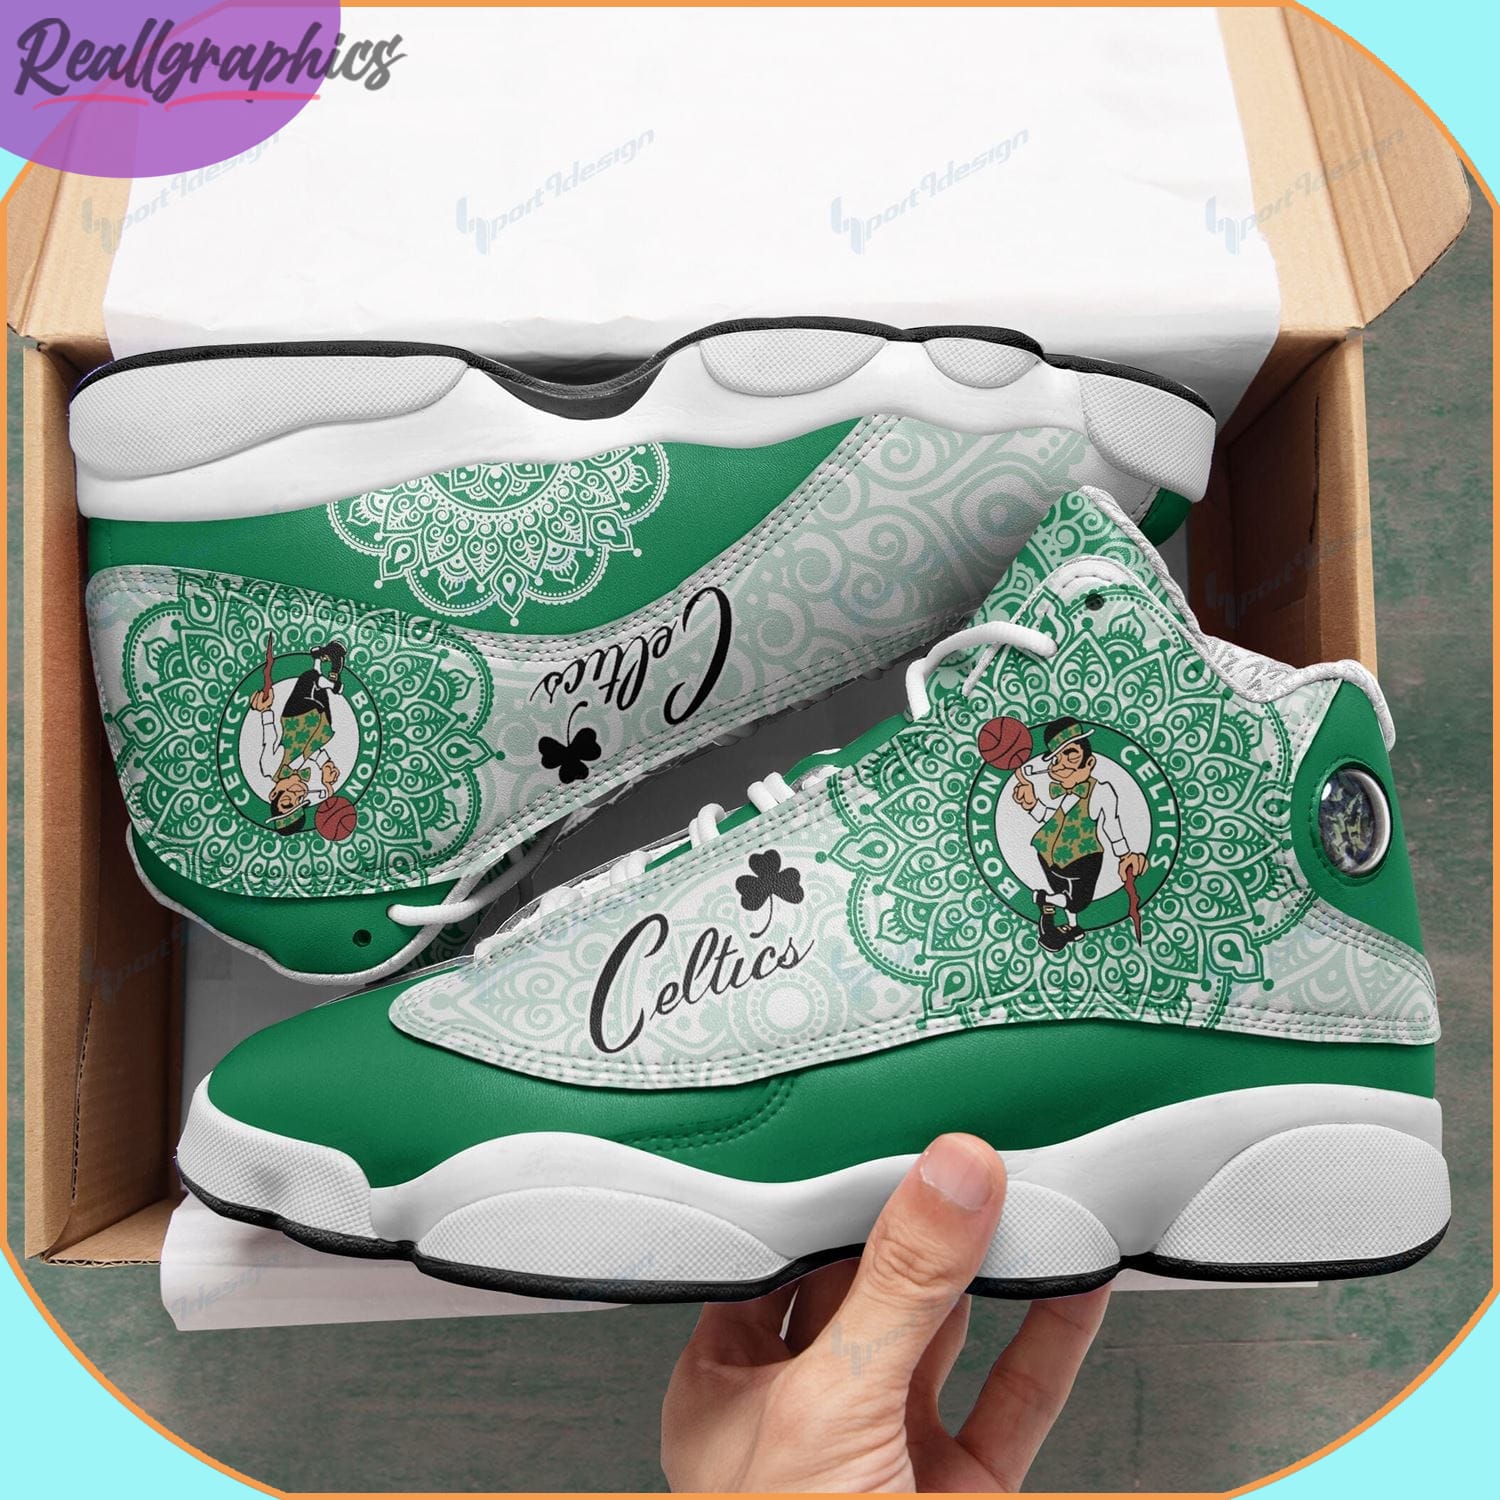 Boston Celtics Team AJordan 13 Sneakers